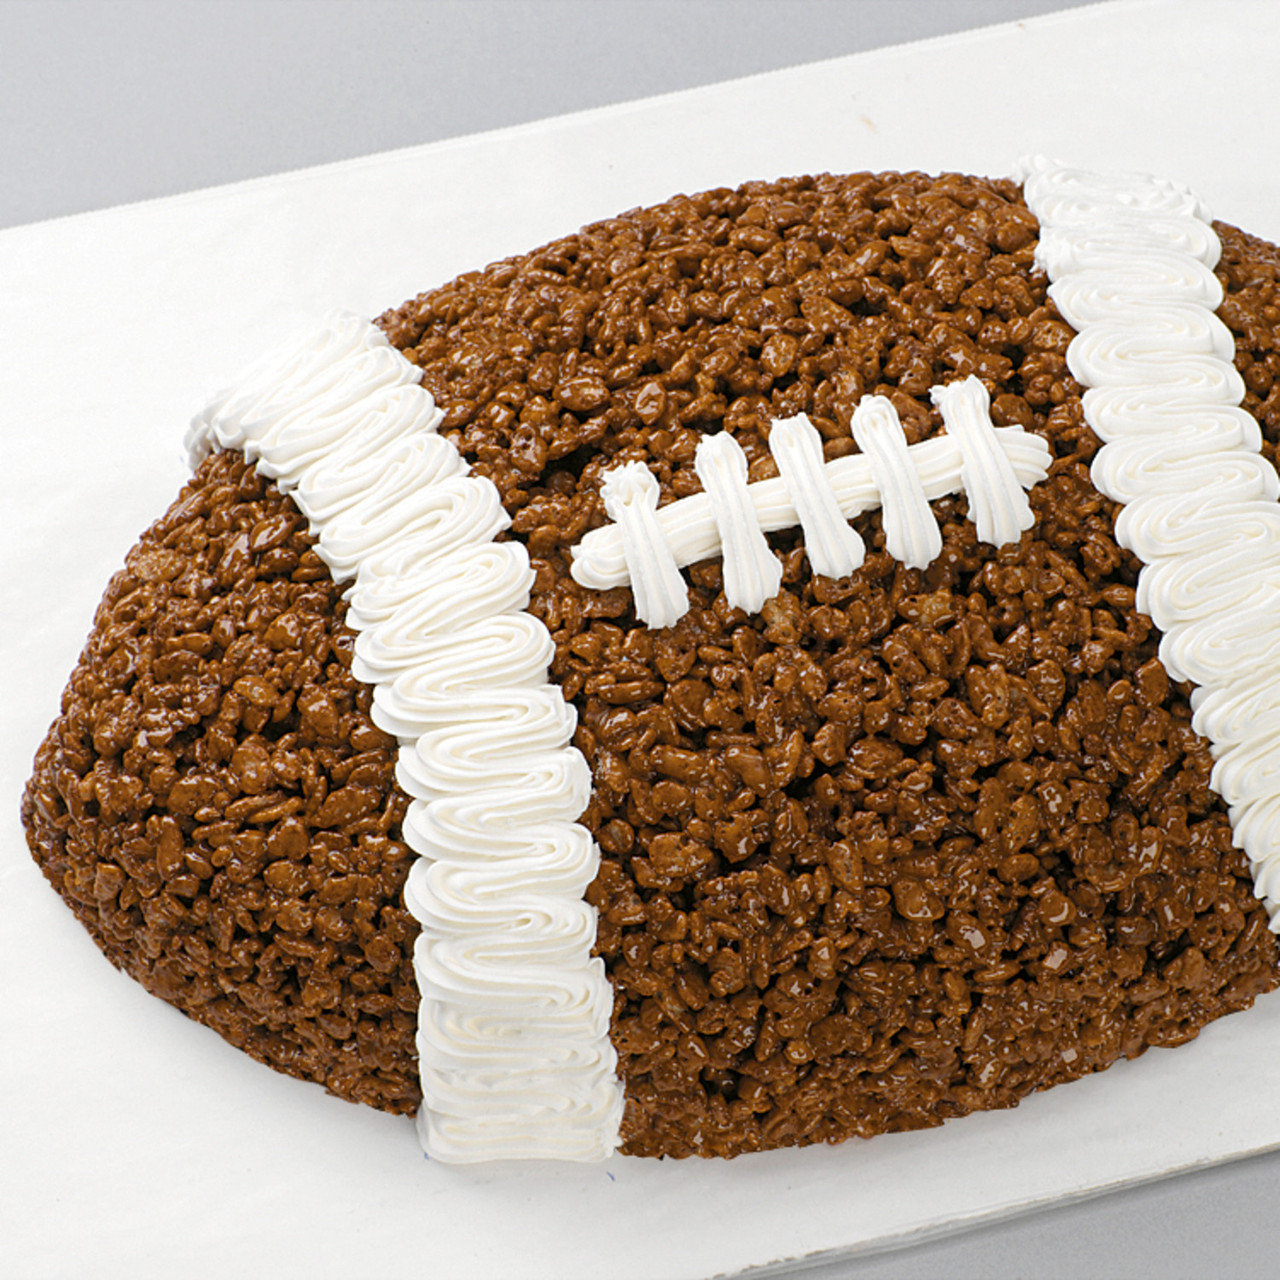 Football Cake Pan — Gloria's Cake & Candy Supplies